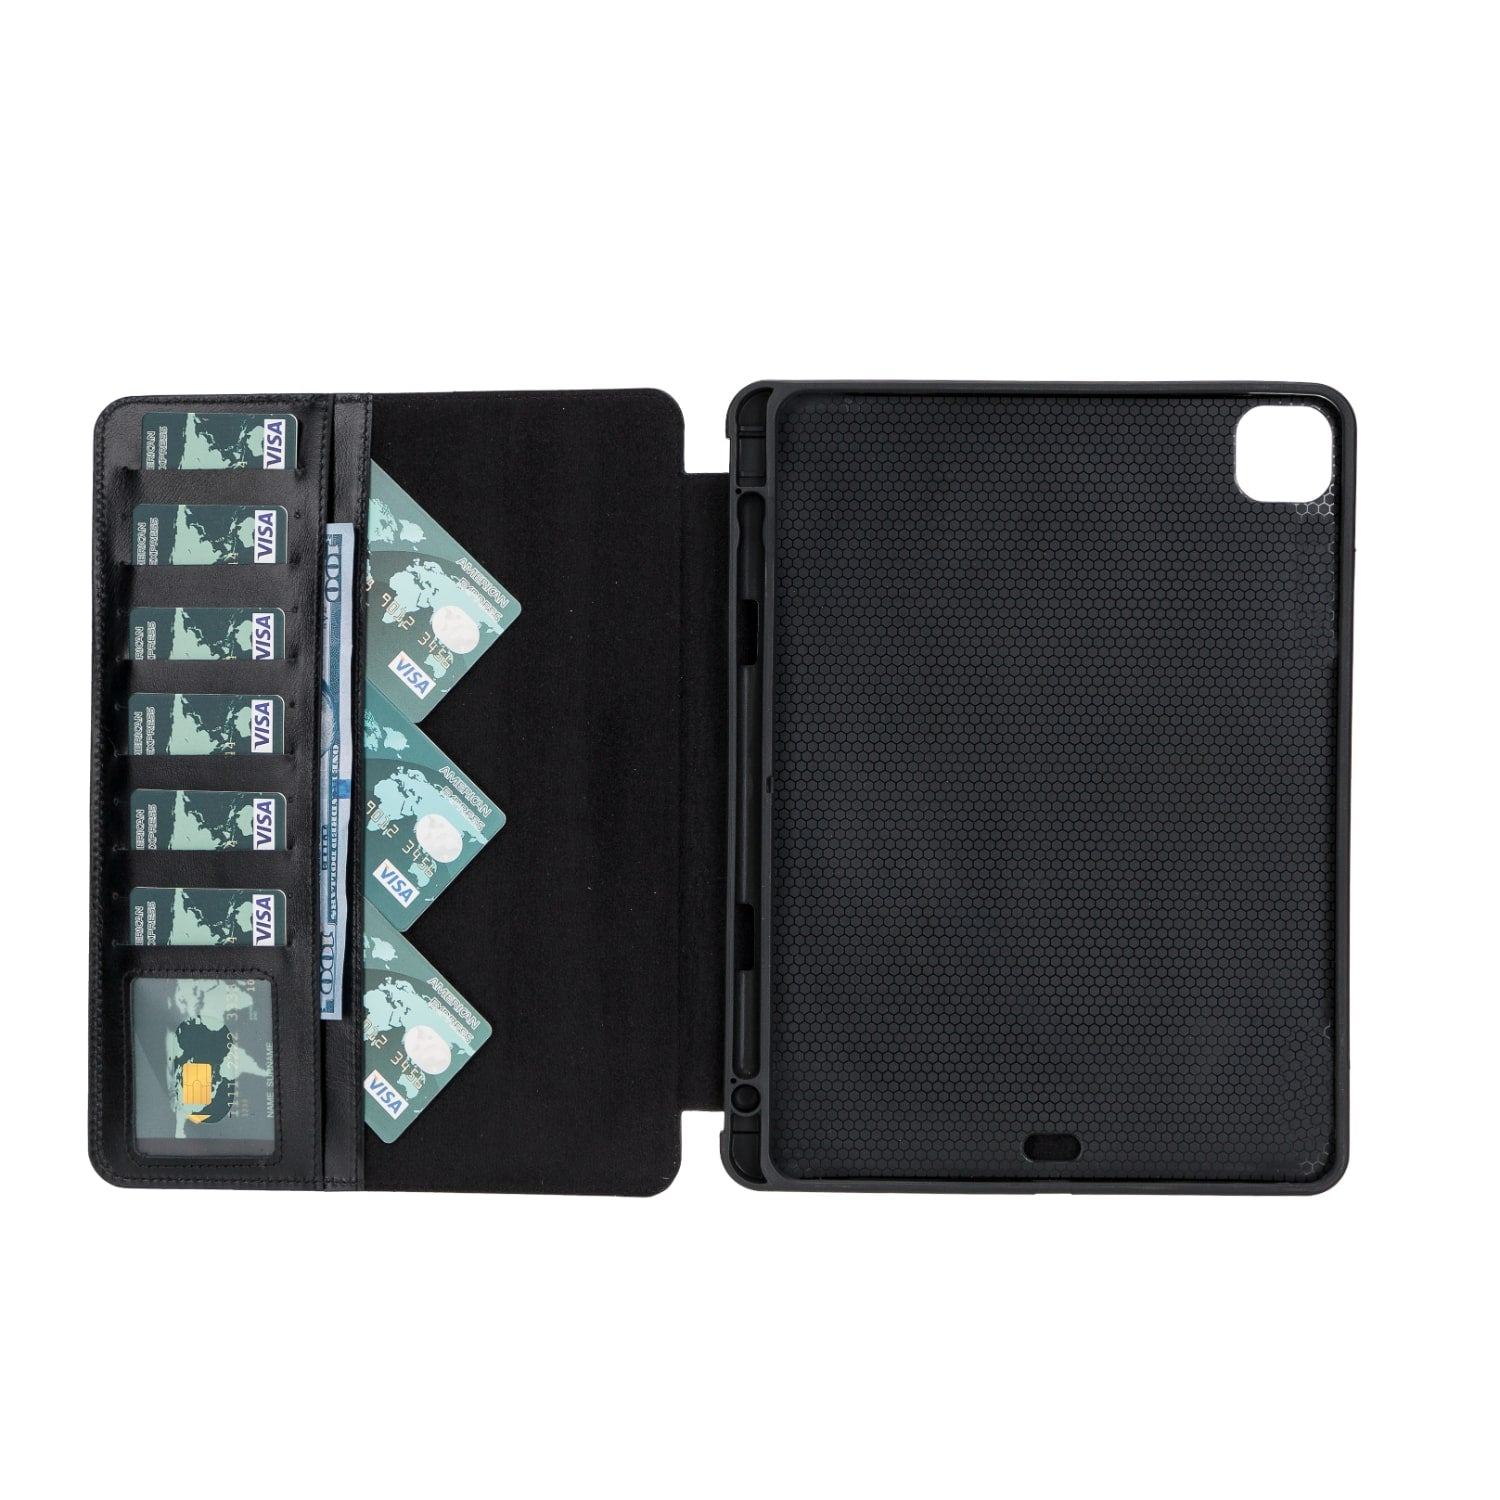 Black Leather iPad Pro 11 Inc Smart Folio Case with Apple Pen Holder - Bomonti - 2